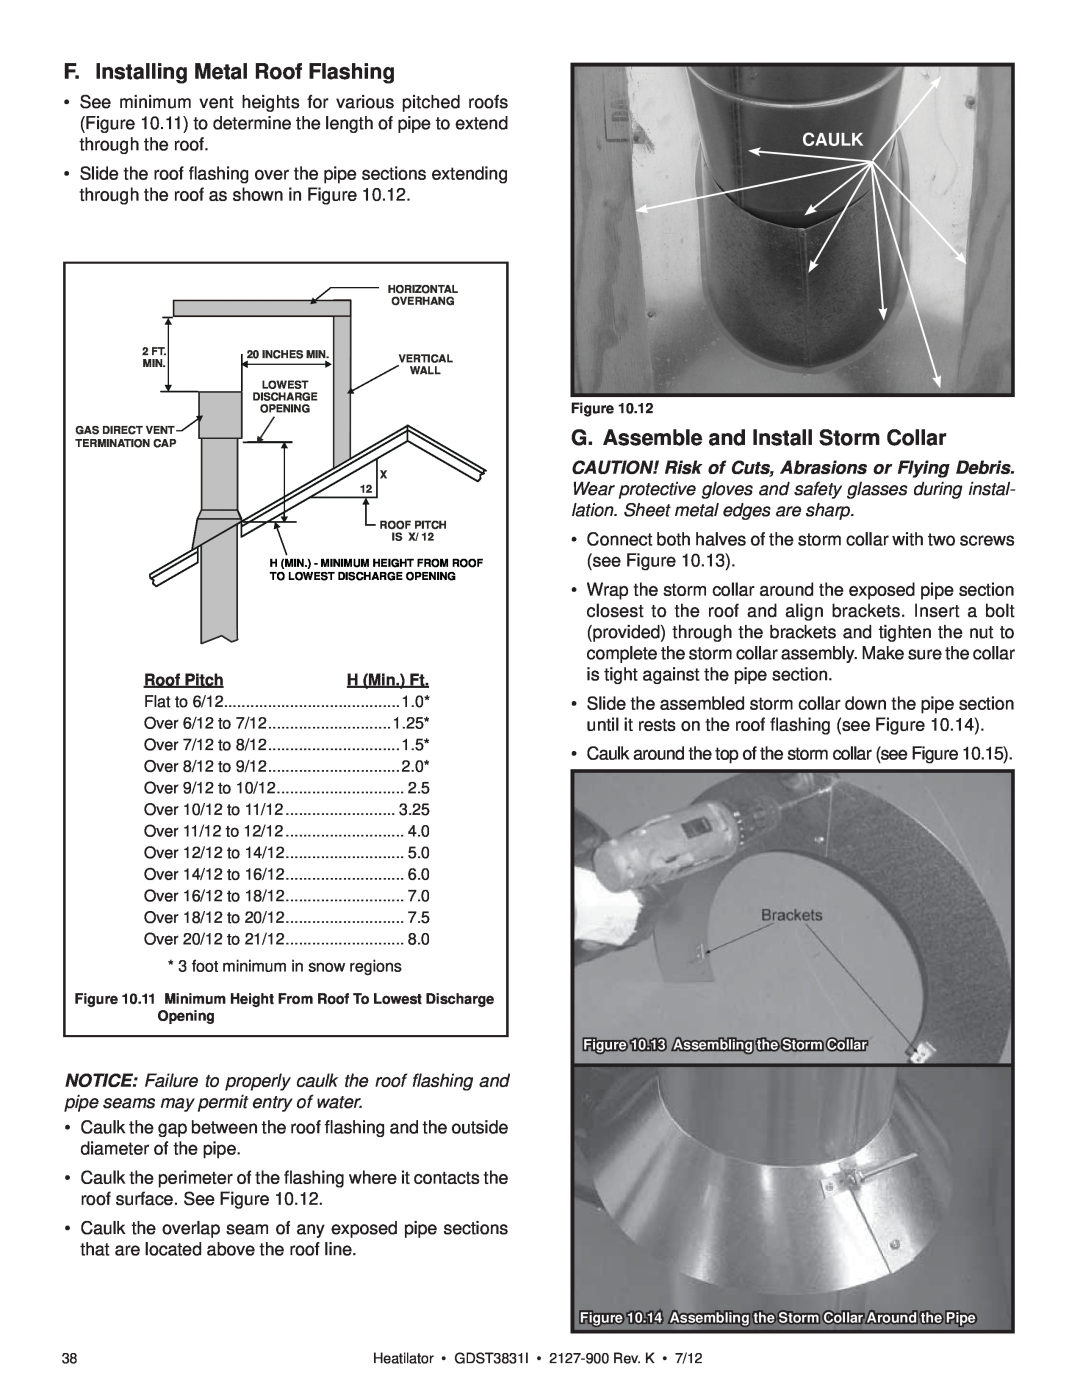 Heatiator GDST3831I owner manual F. Installing Metal Roof Flashing, G. Assemble and Install Storm Collar, Caulk 